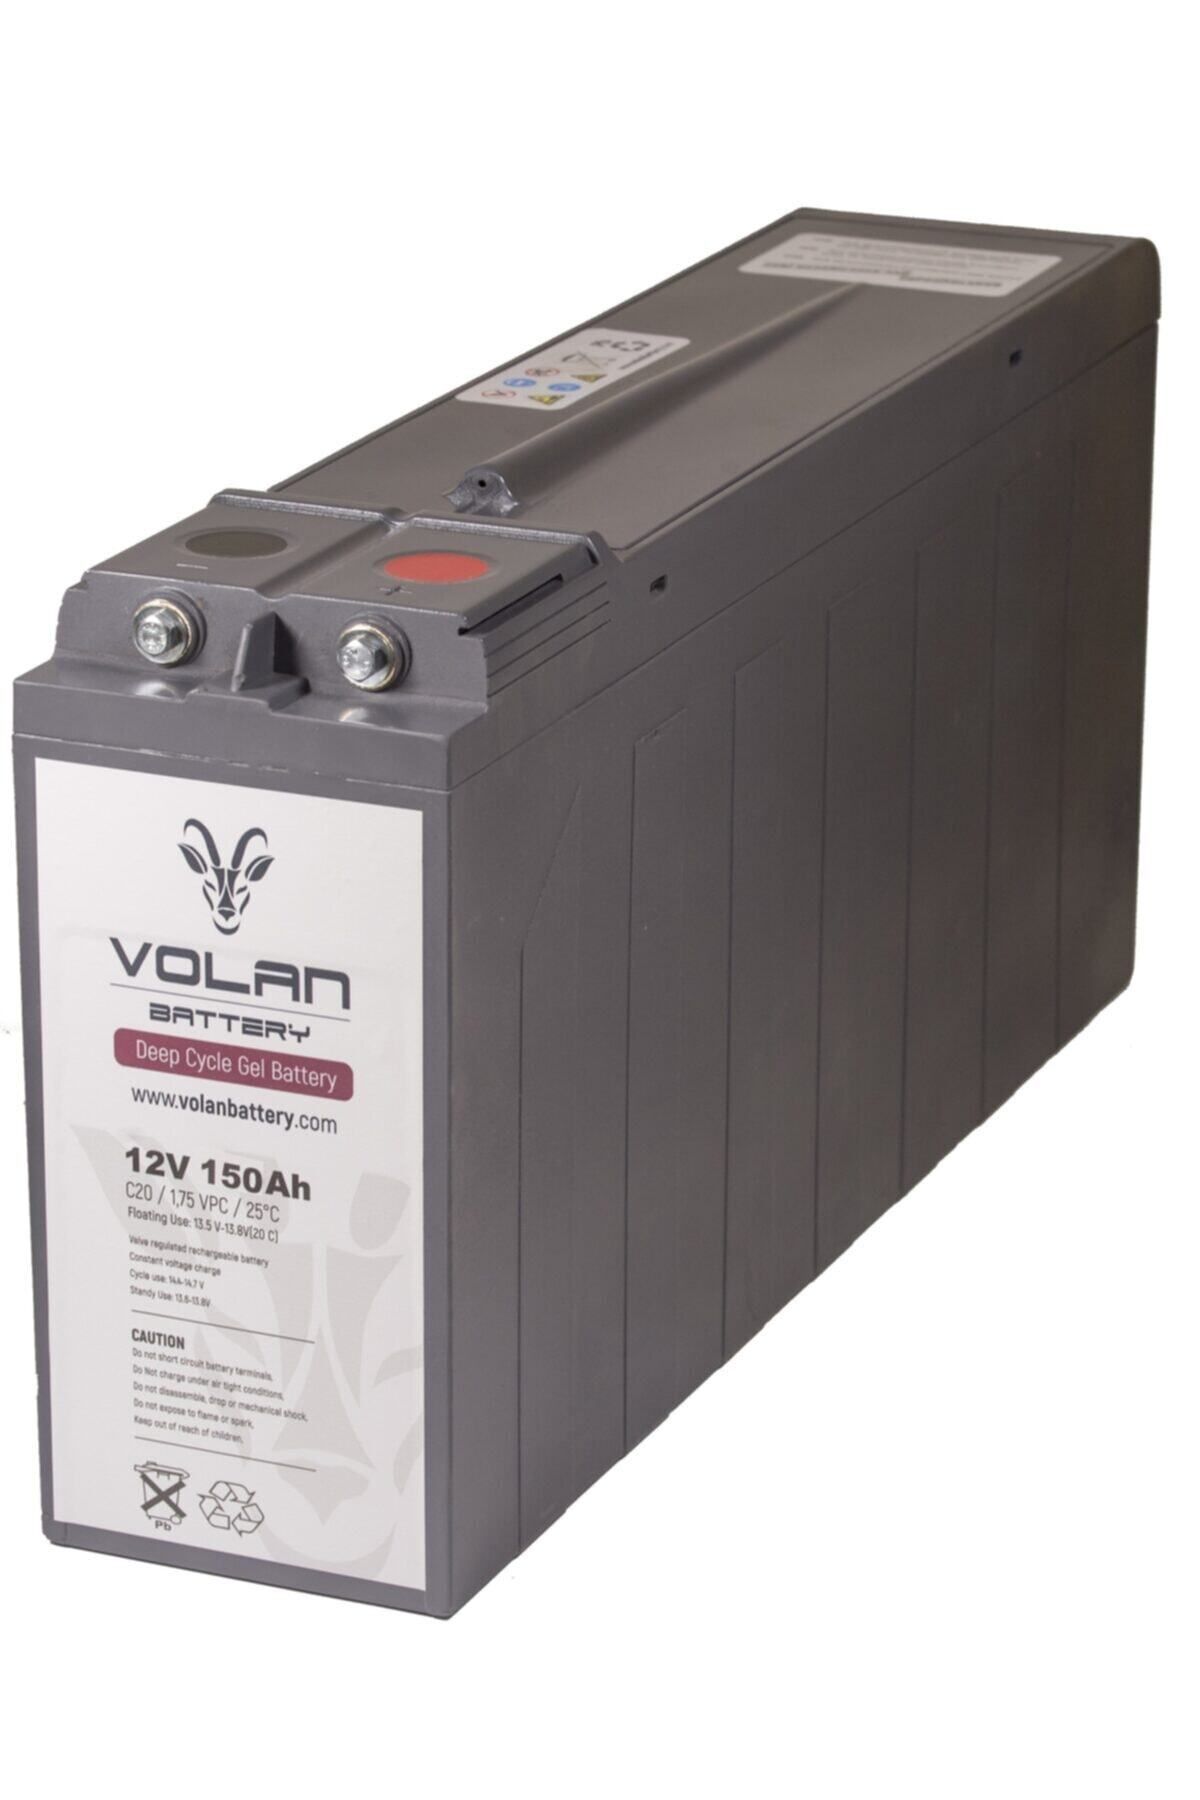 Volan Battery 12 Volt 150 Amper Solar Jel Akü